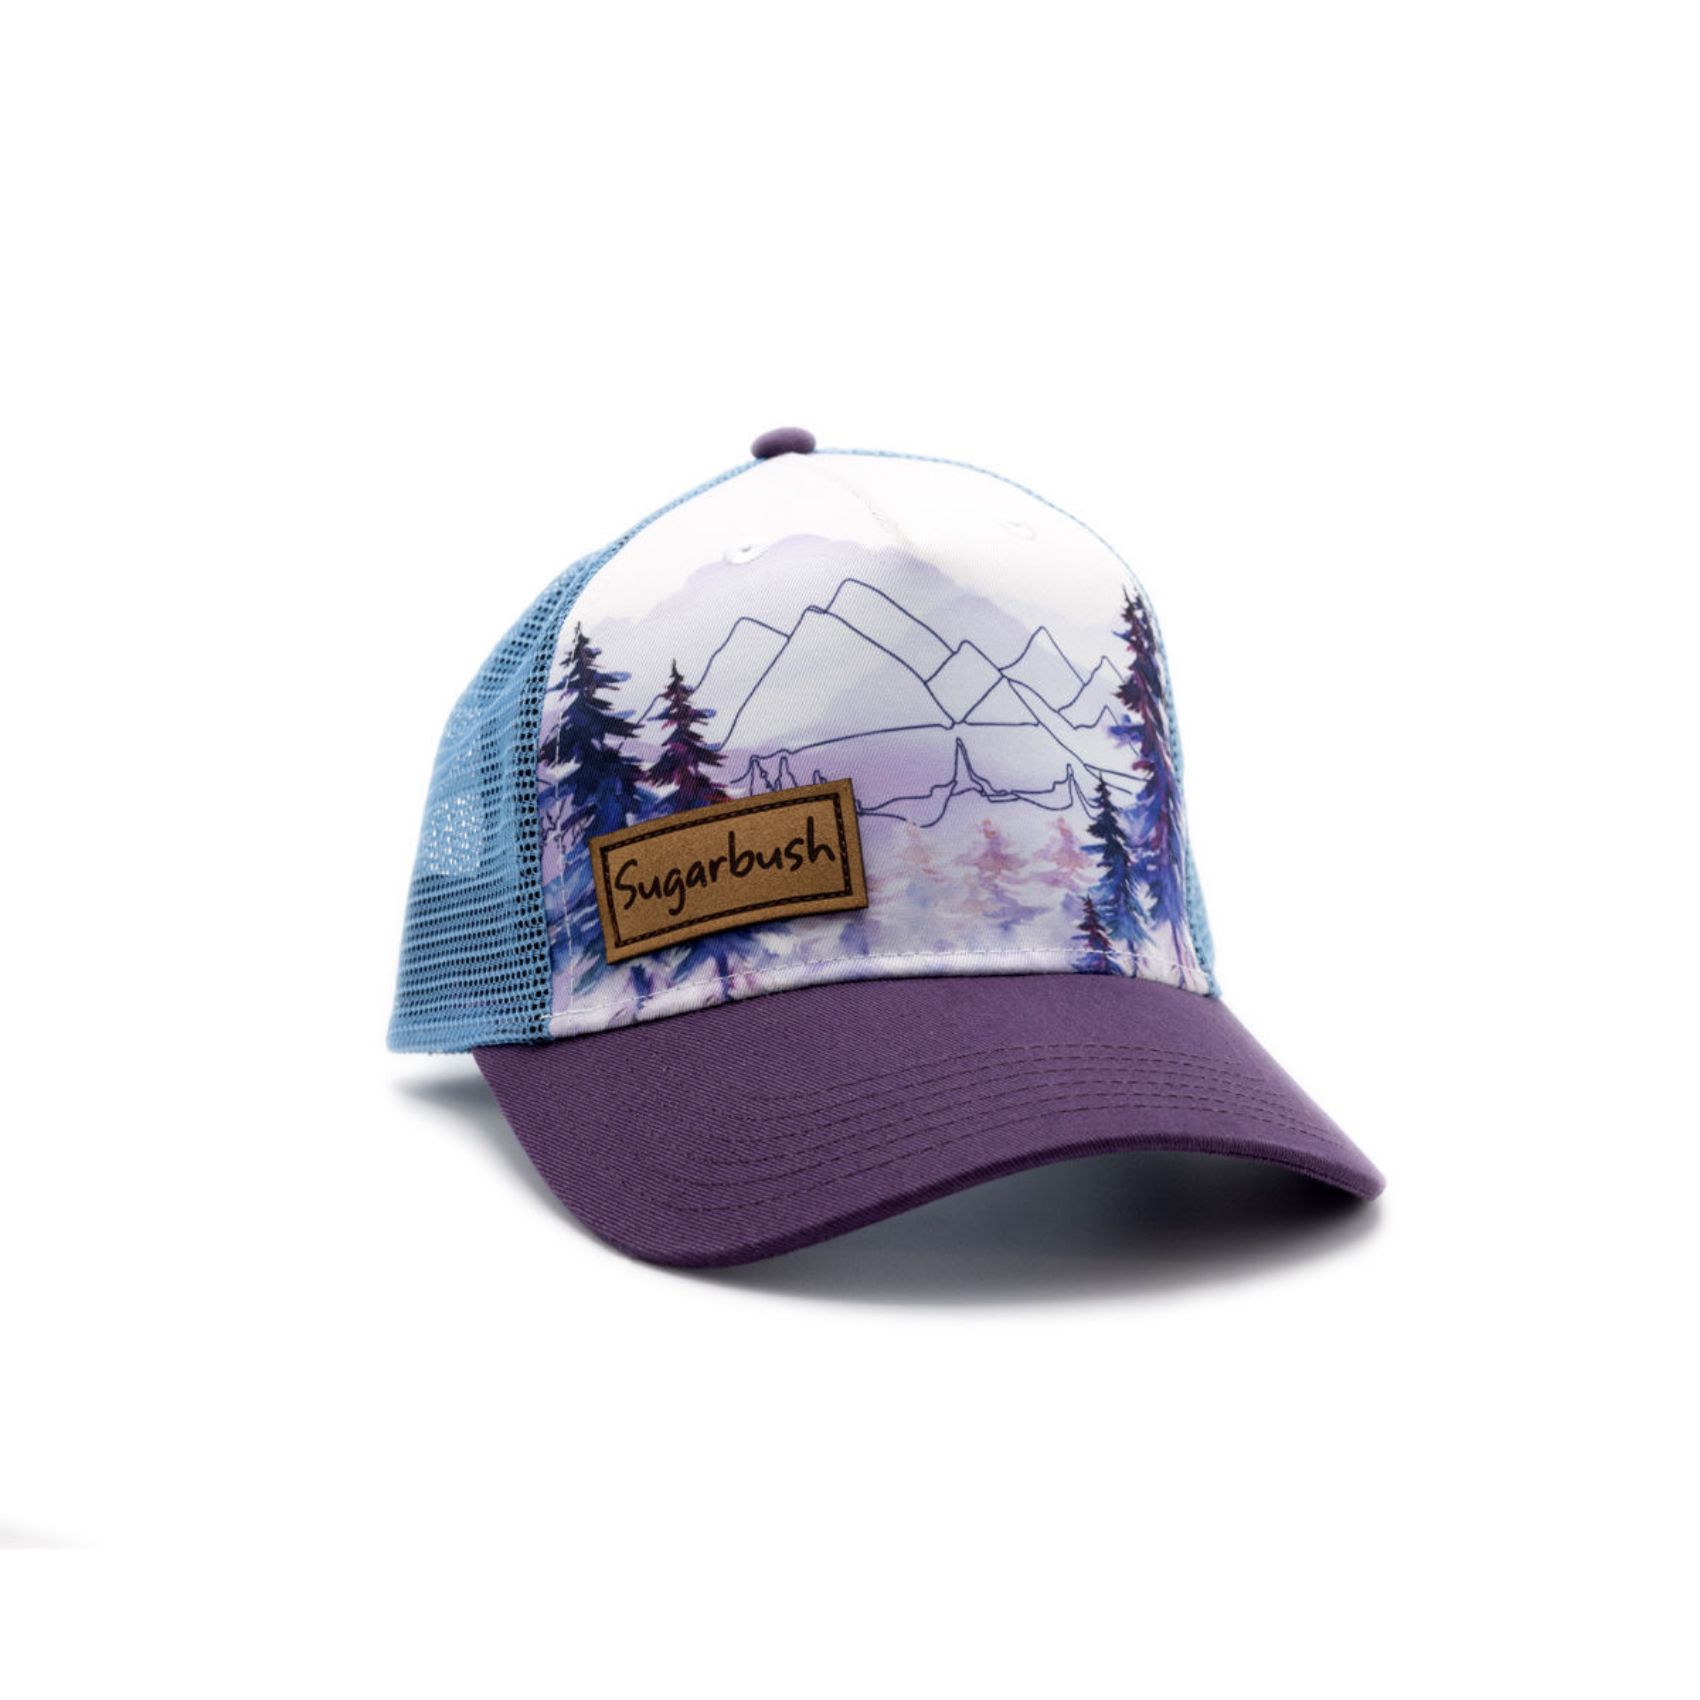 Sugarbush Online Store. Hats